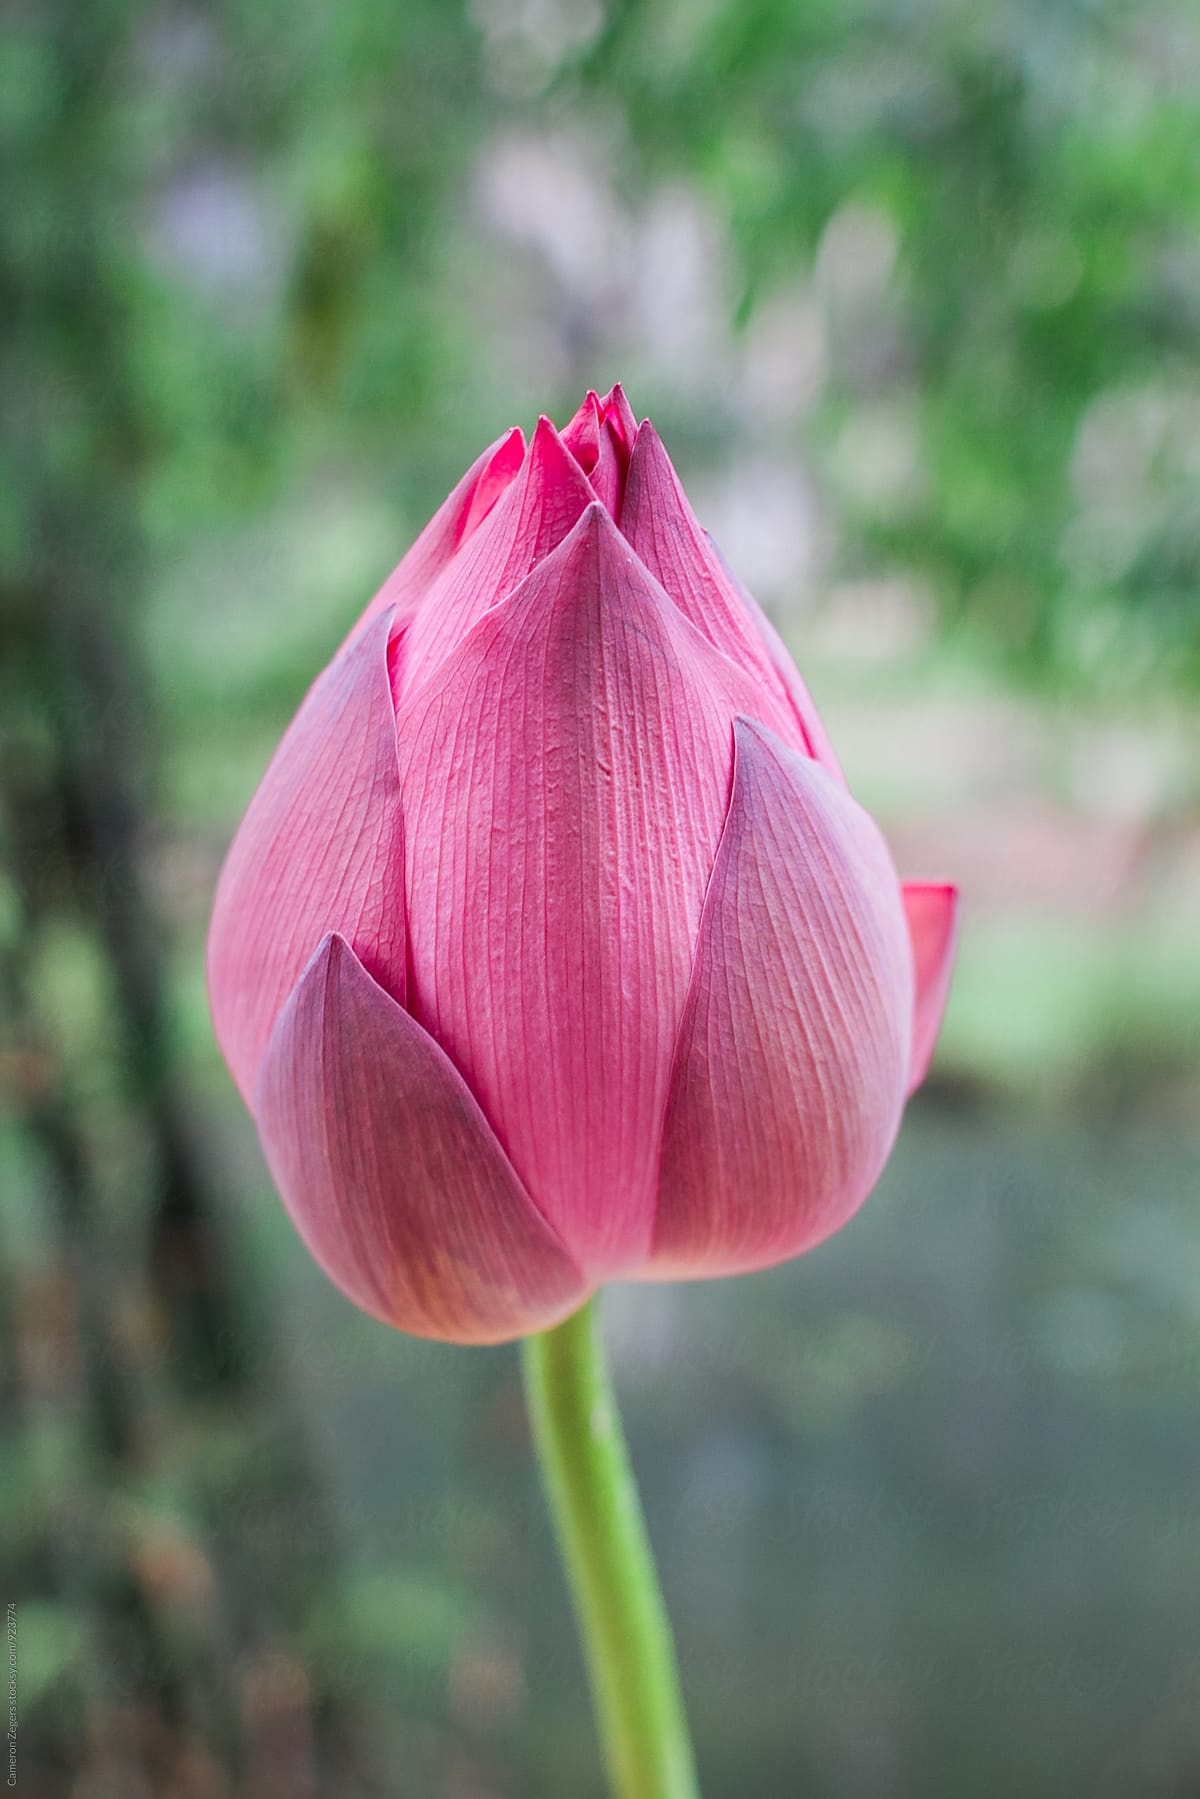 Lotus Flower Bud by Stocksy Contributor Cameron Zegers - Stocksy